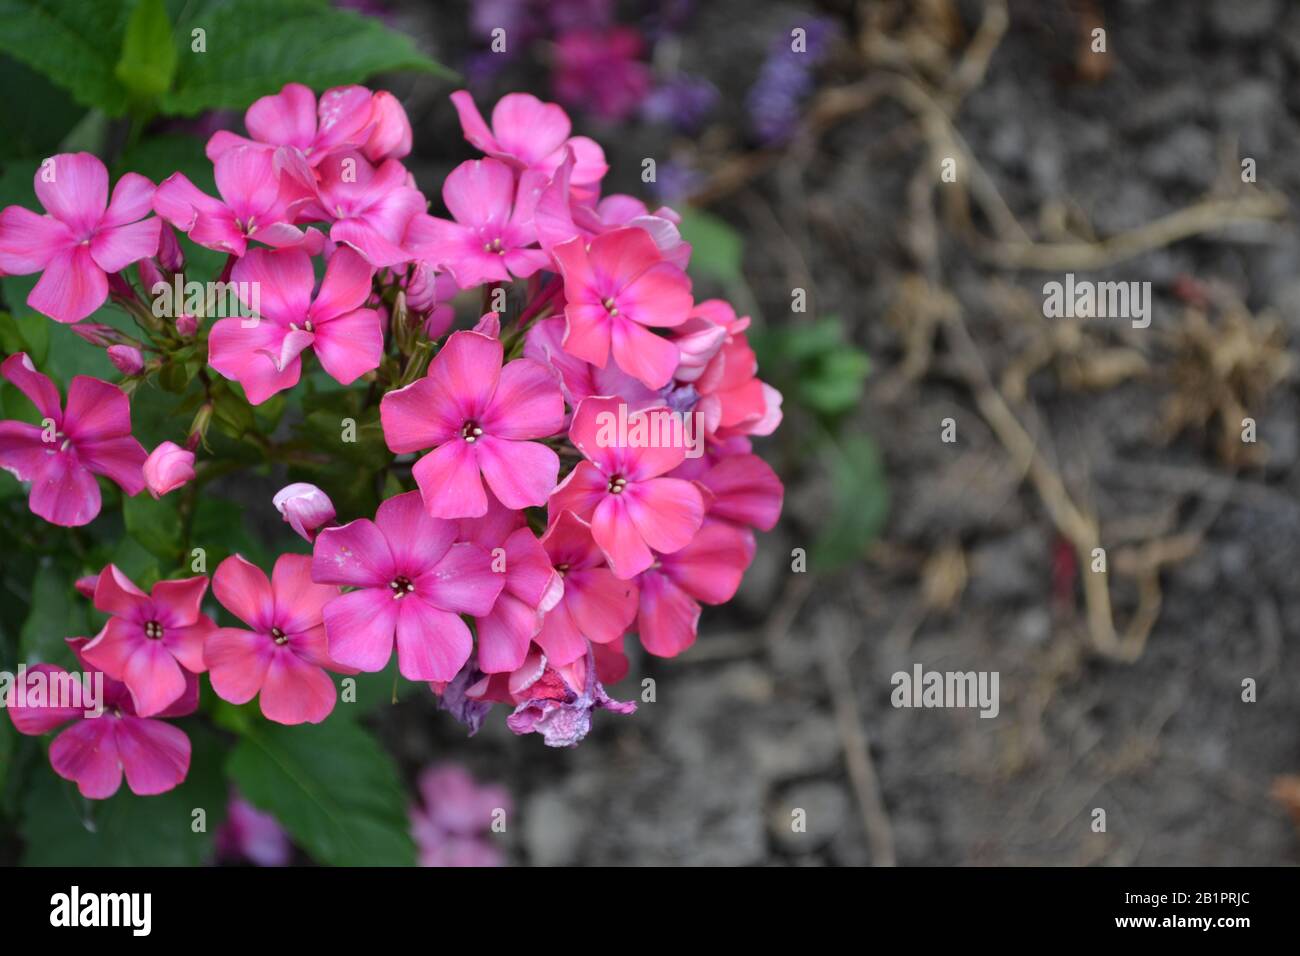 Phlox. Polemoniaceae. Growing flowers. Flowerbed. Garden. Floriculture. Pink inflorescence. Beautiful flowers. Green leaves. Bushes. Horizontal Stock Photo